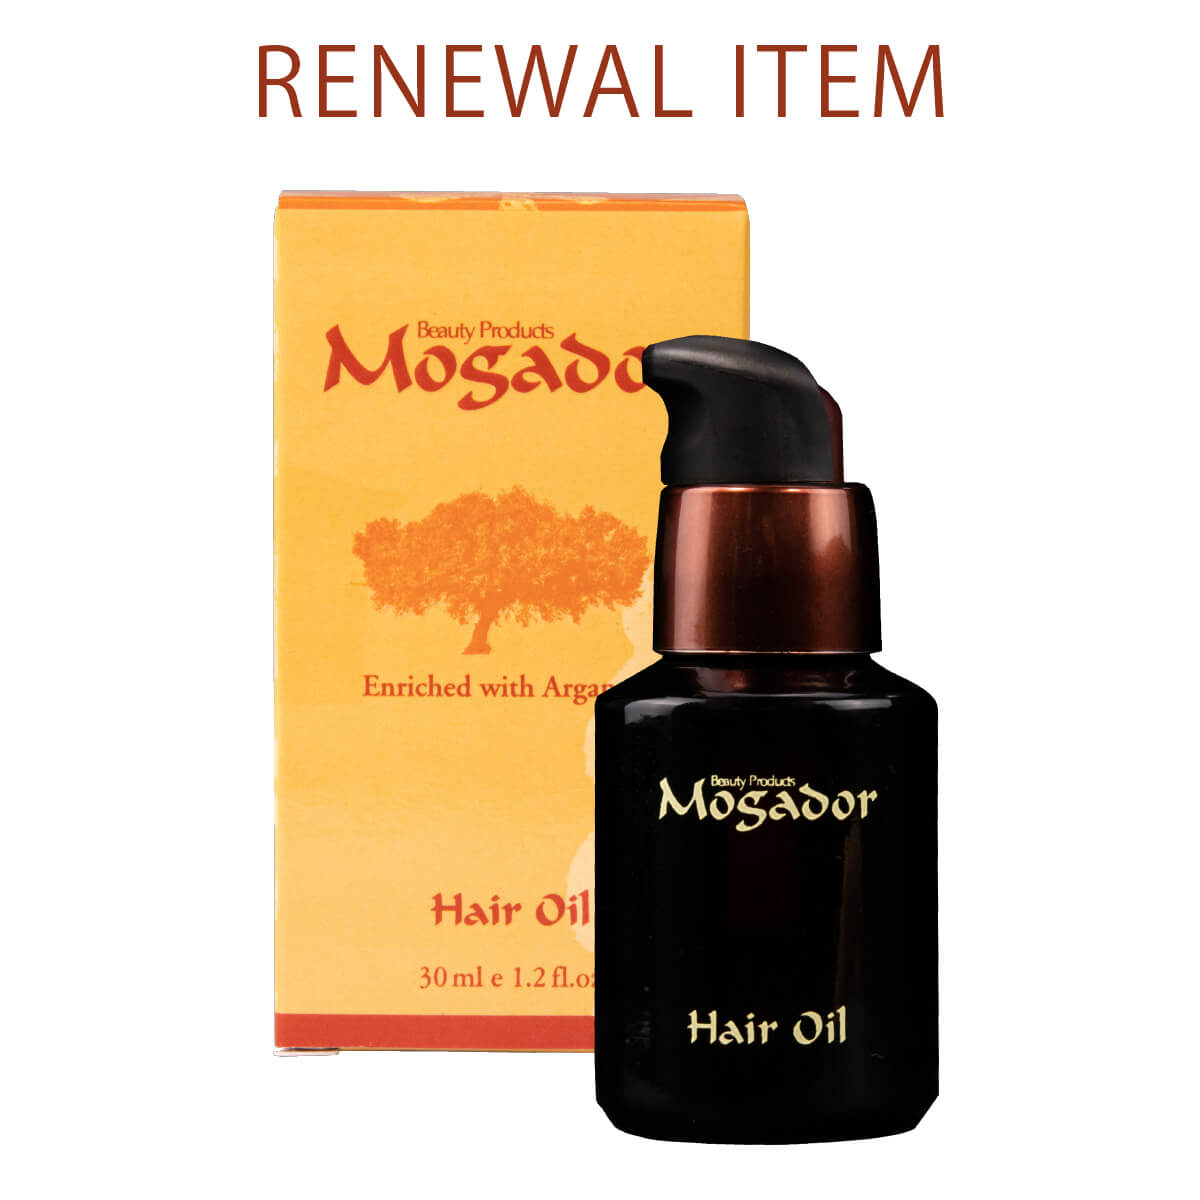 RENEWAL Mogador hair Oil 30ml|JAS Organic Complex ?|日本限定 新し香りにリニューアル